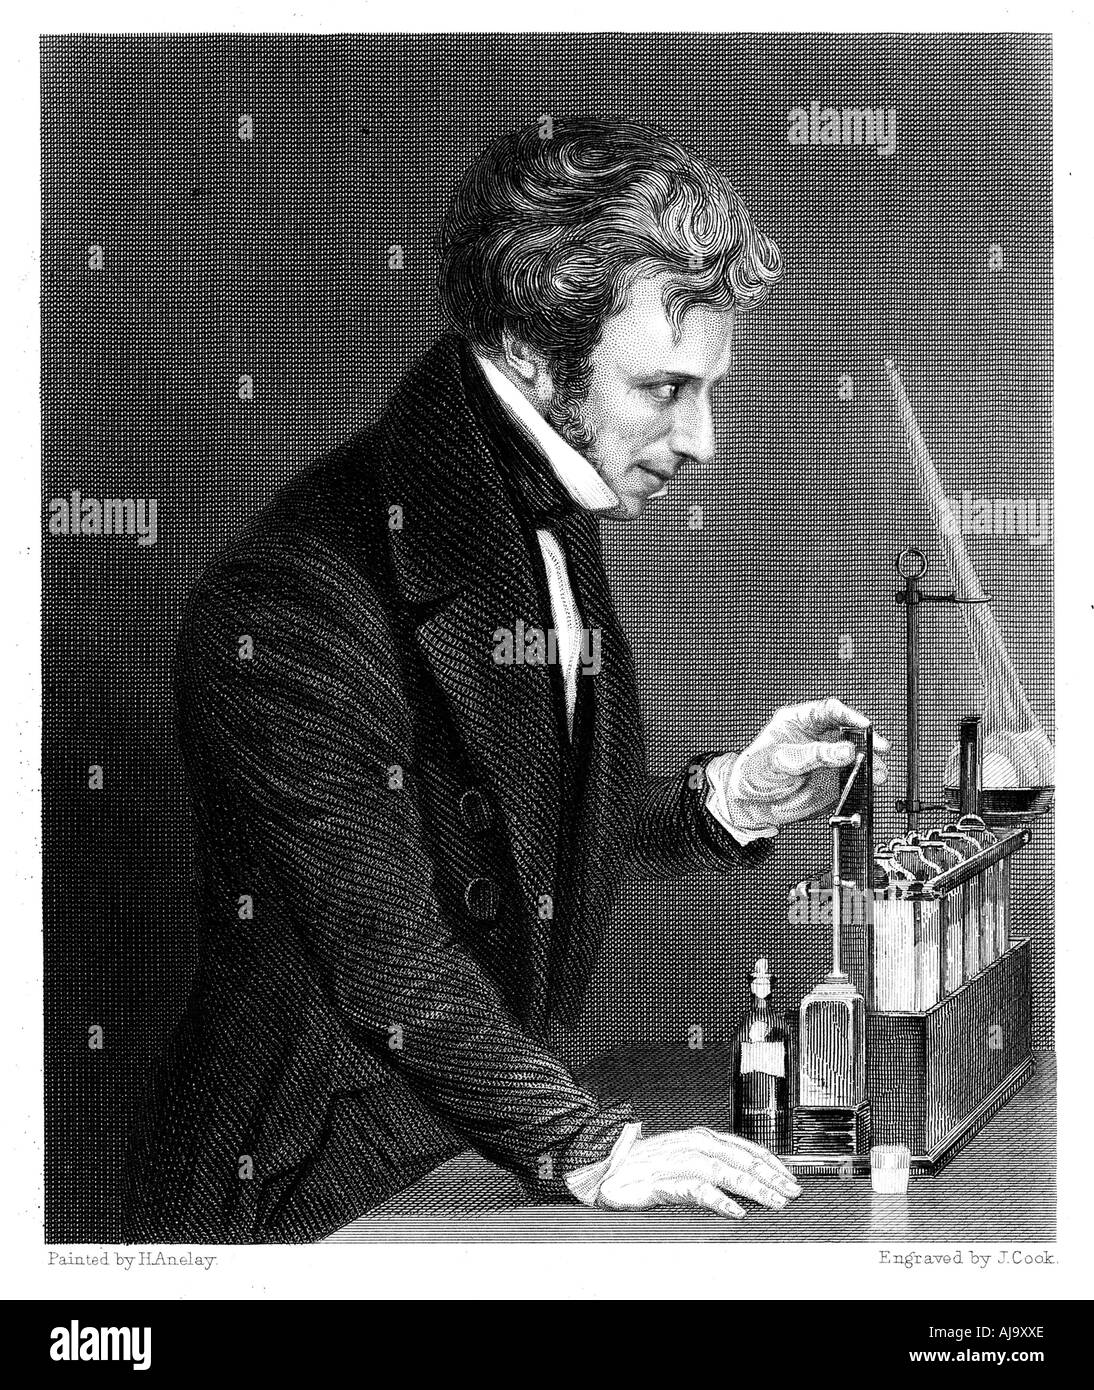 Michael Faraday, British chemist and physicist, c1845. Artist: J Cook Stock Photo